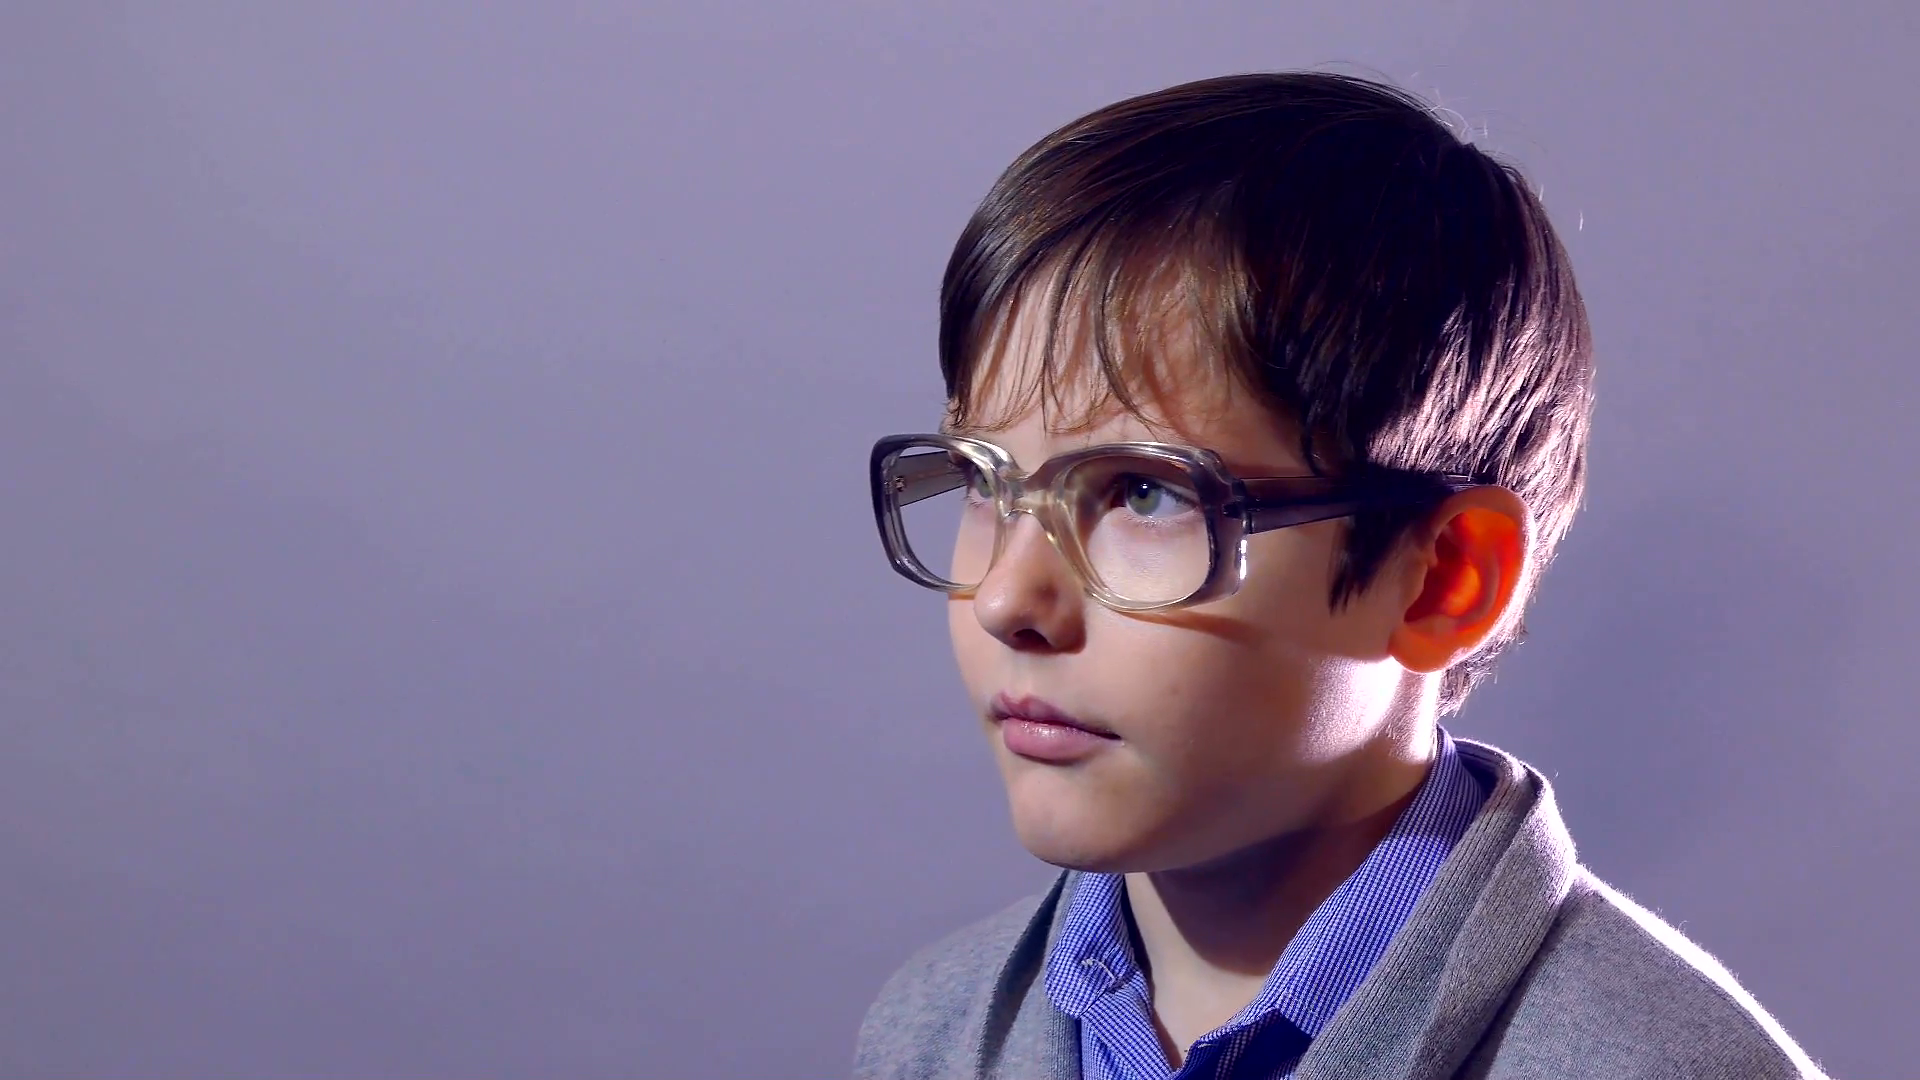 boy nerd teenager portrait schoolboy glasses on purple background ...